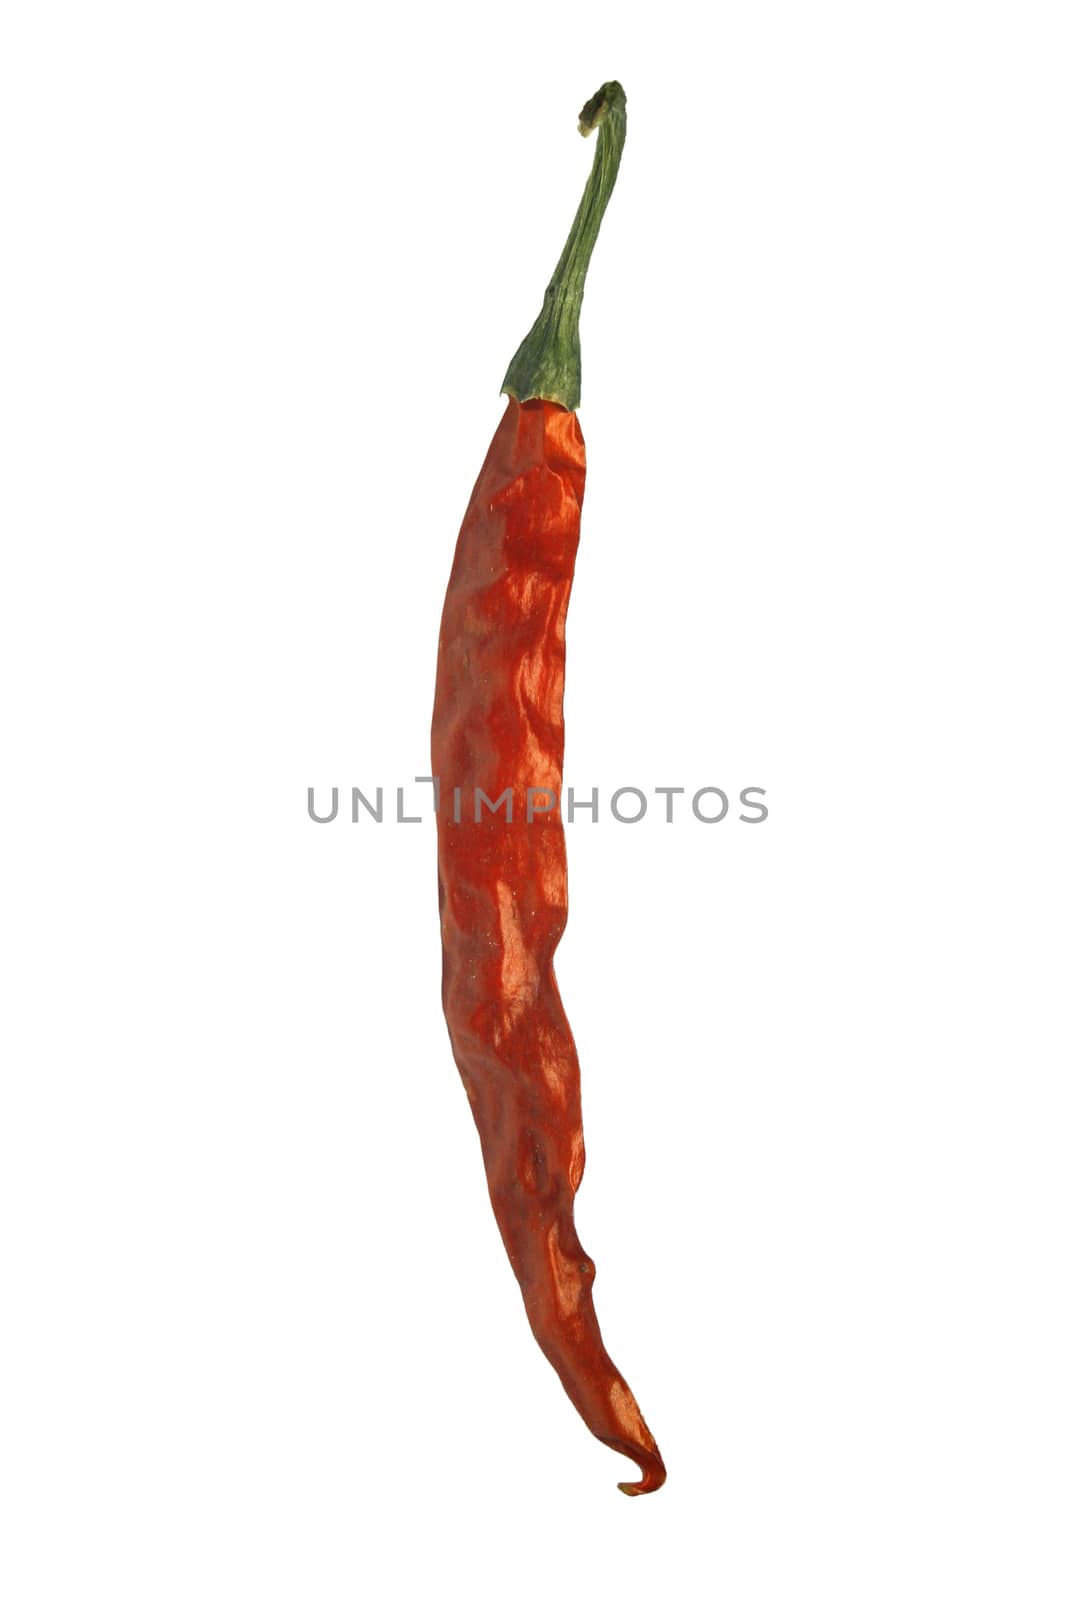 Chili pepper, Red Chili